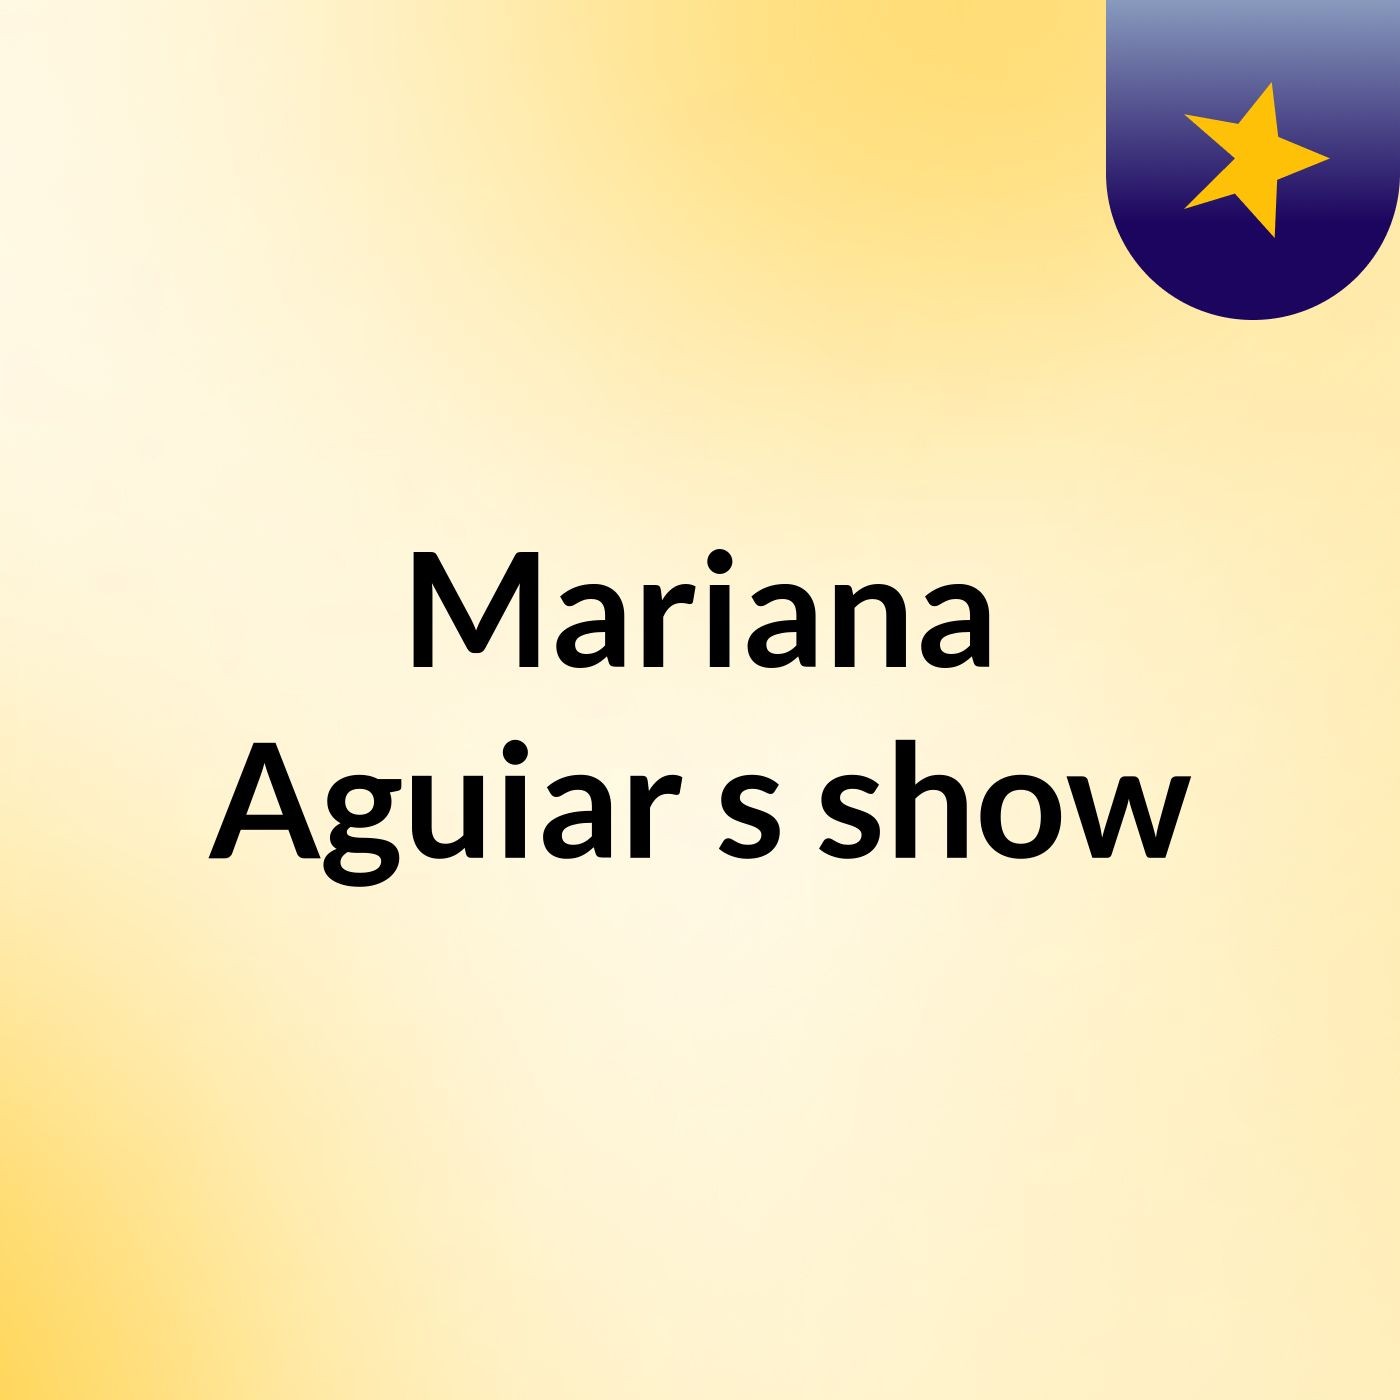 Mariana Aguiar's show